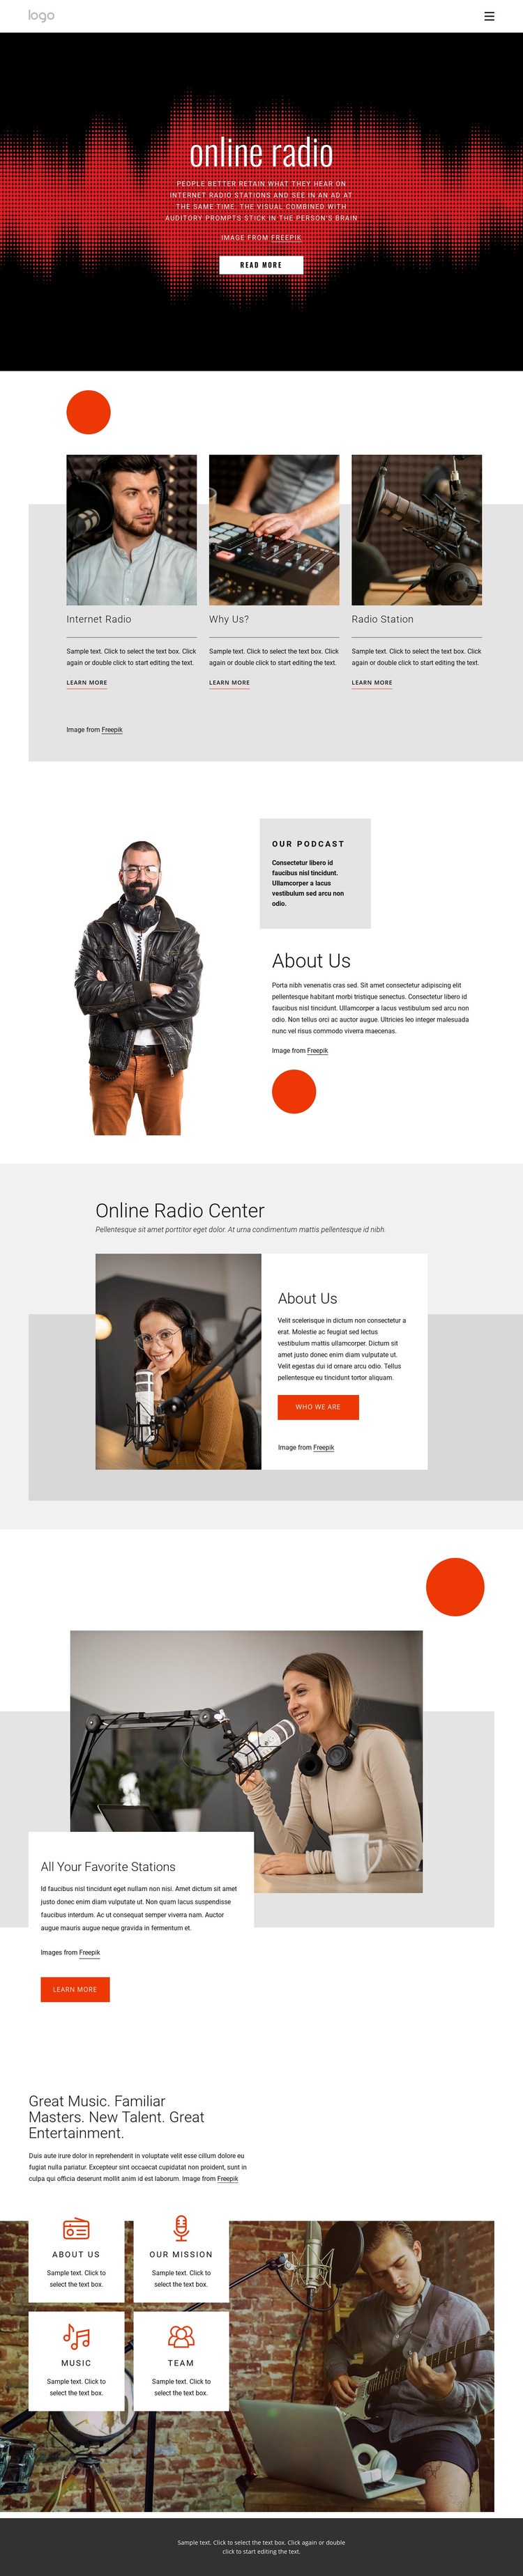 Online radio shows Web Page Design